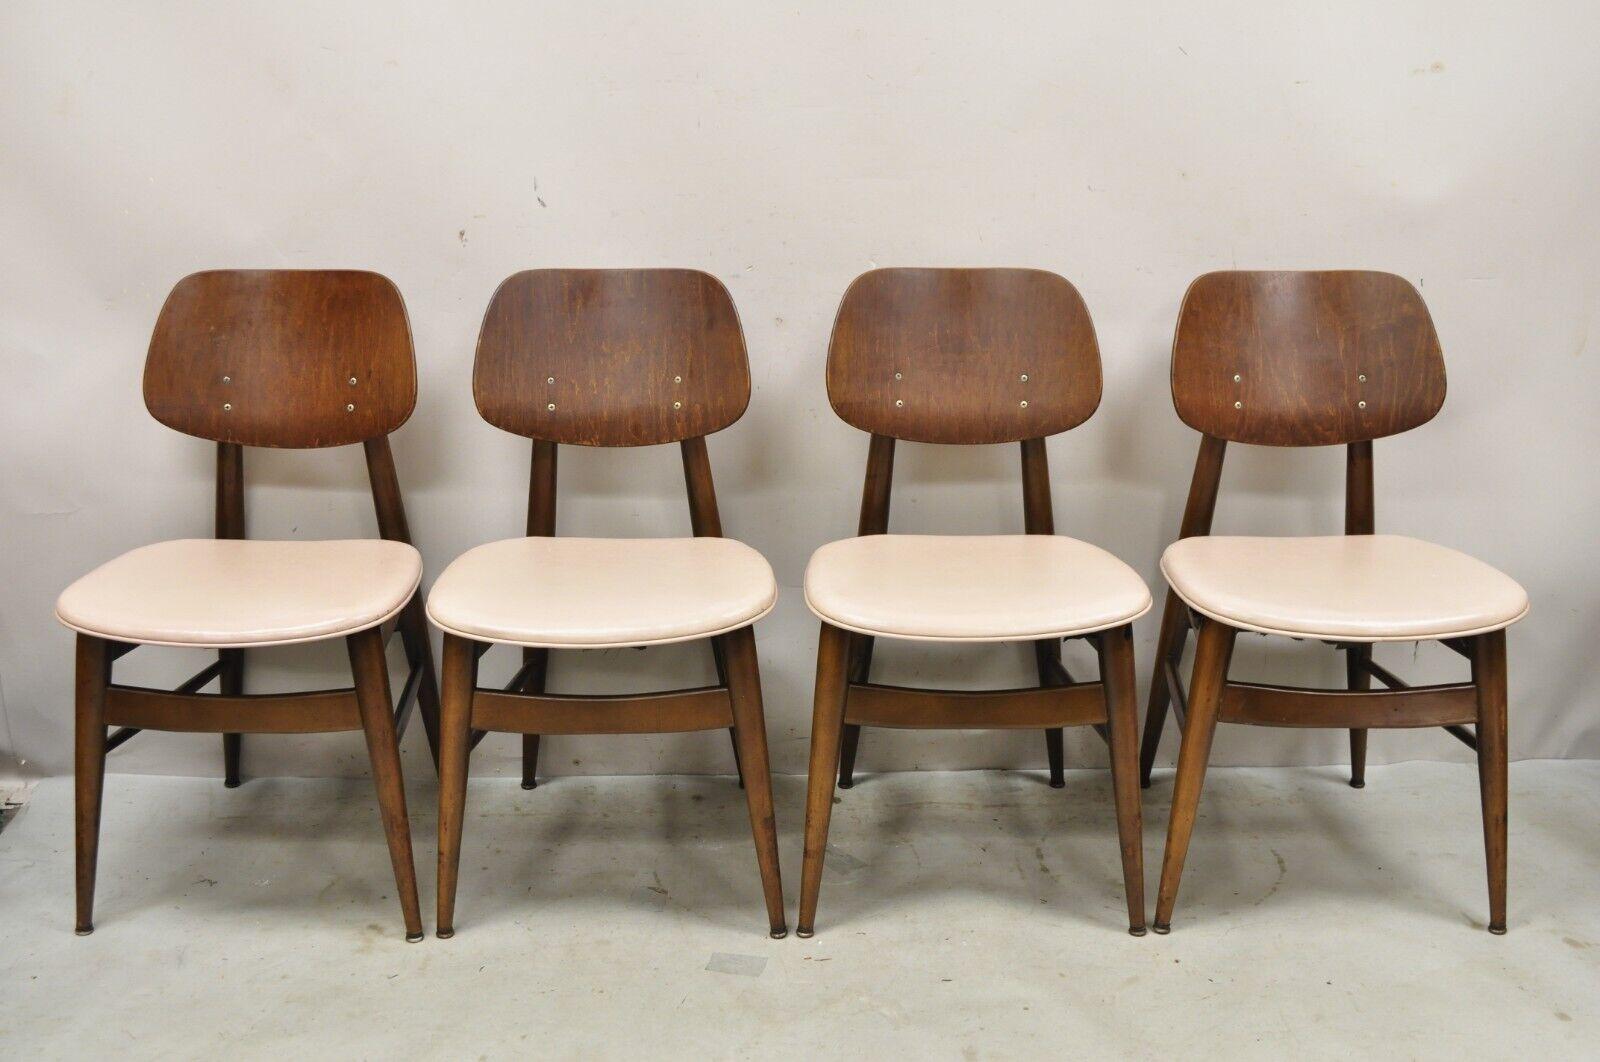 Vintage Thonet Mid Century Modern Bentwood Walnut Dining Chairs - Set of 4. Circa Mid 20th Century. Measurements: 31.5